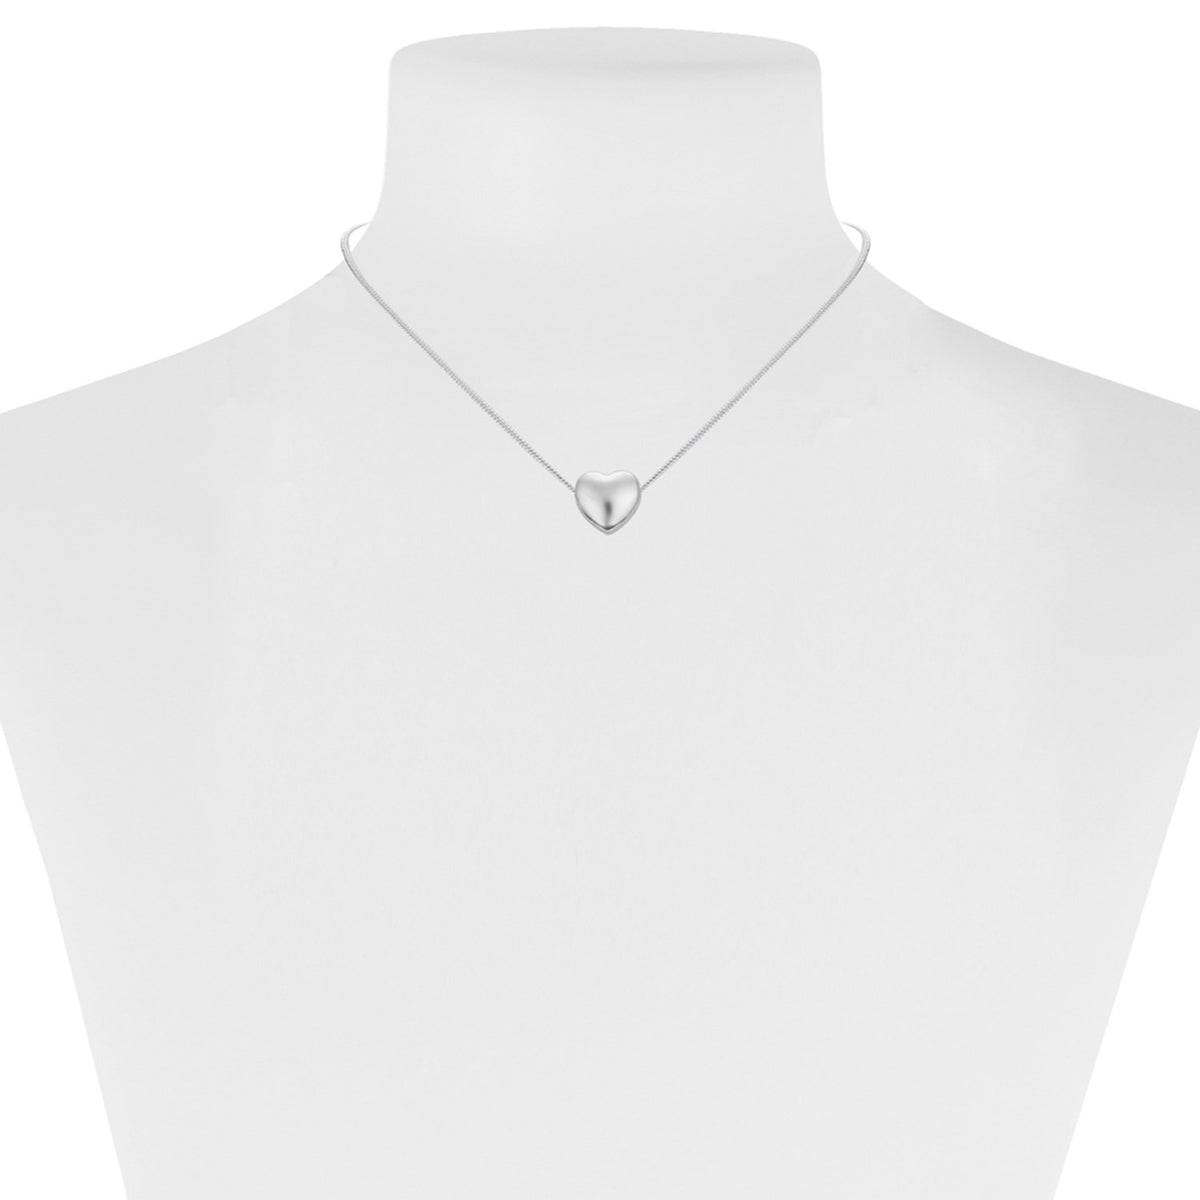 Silver little heart pendant necklace